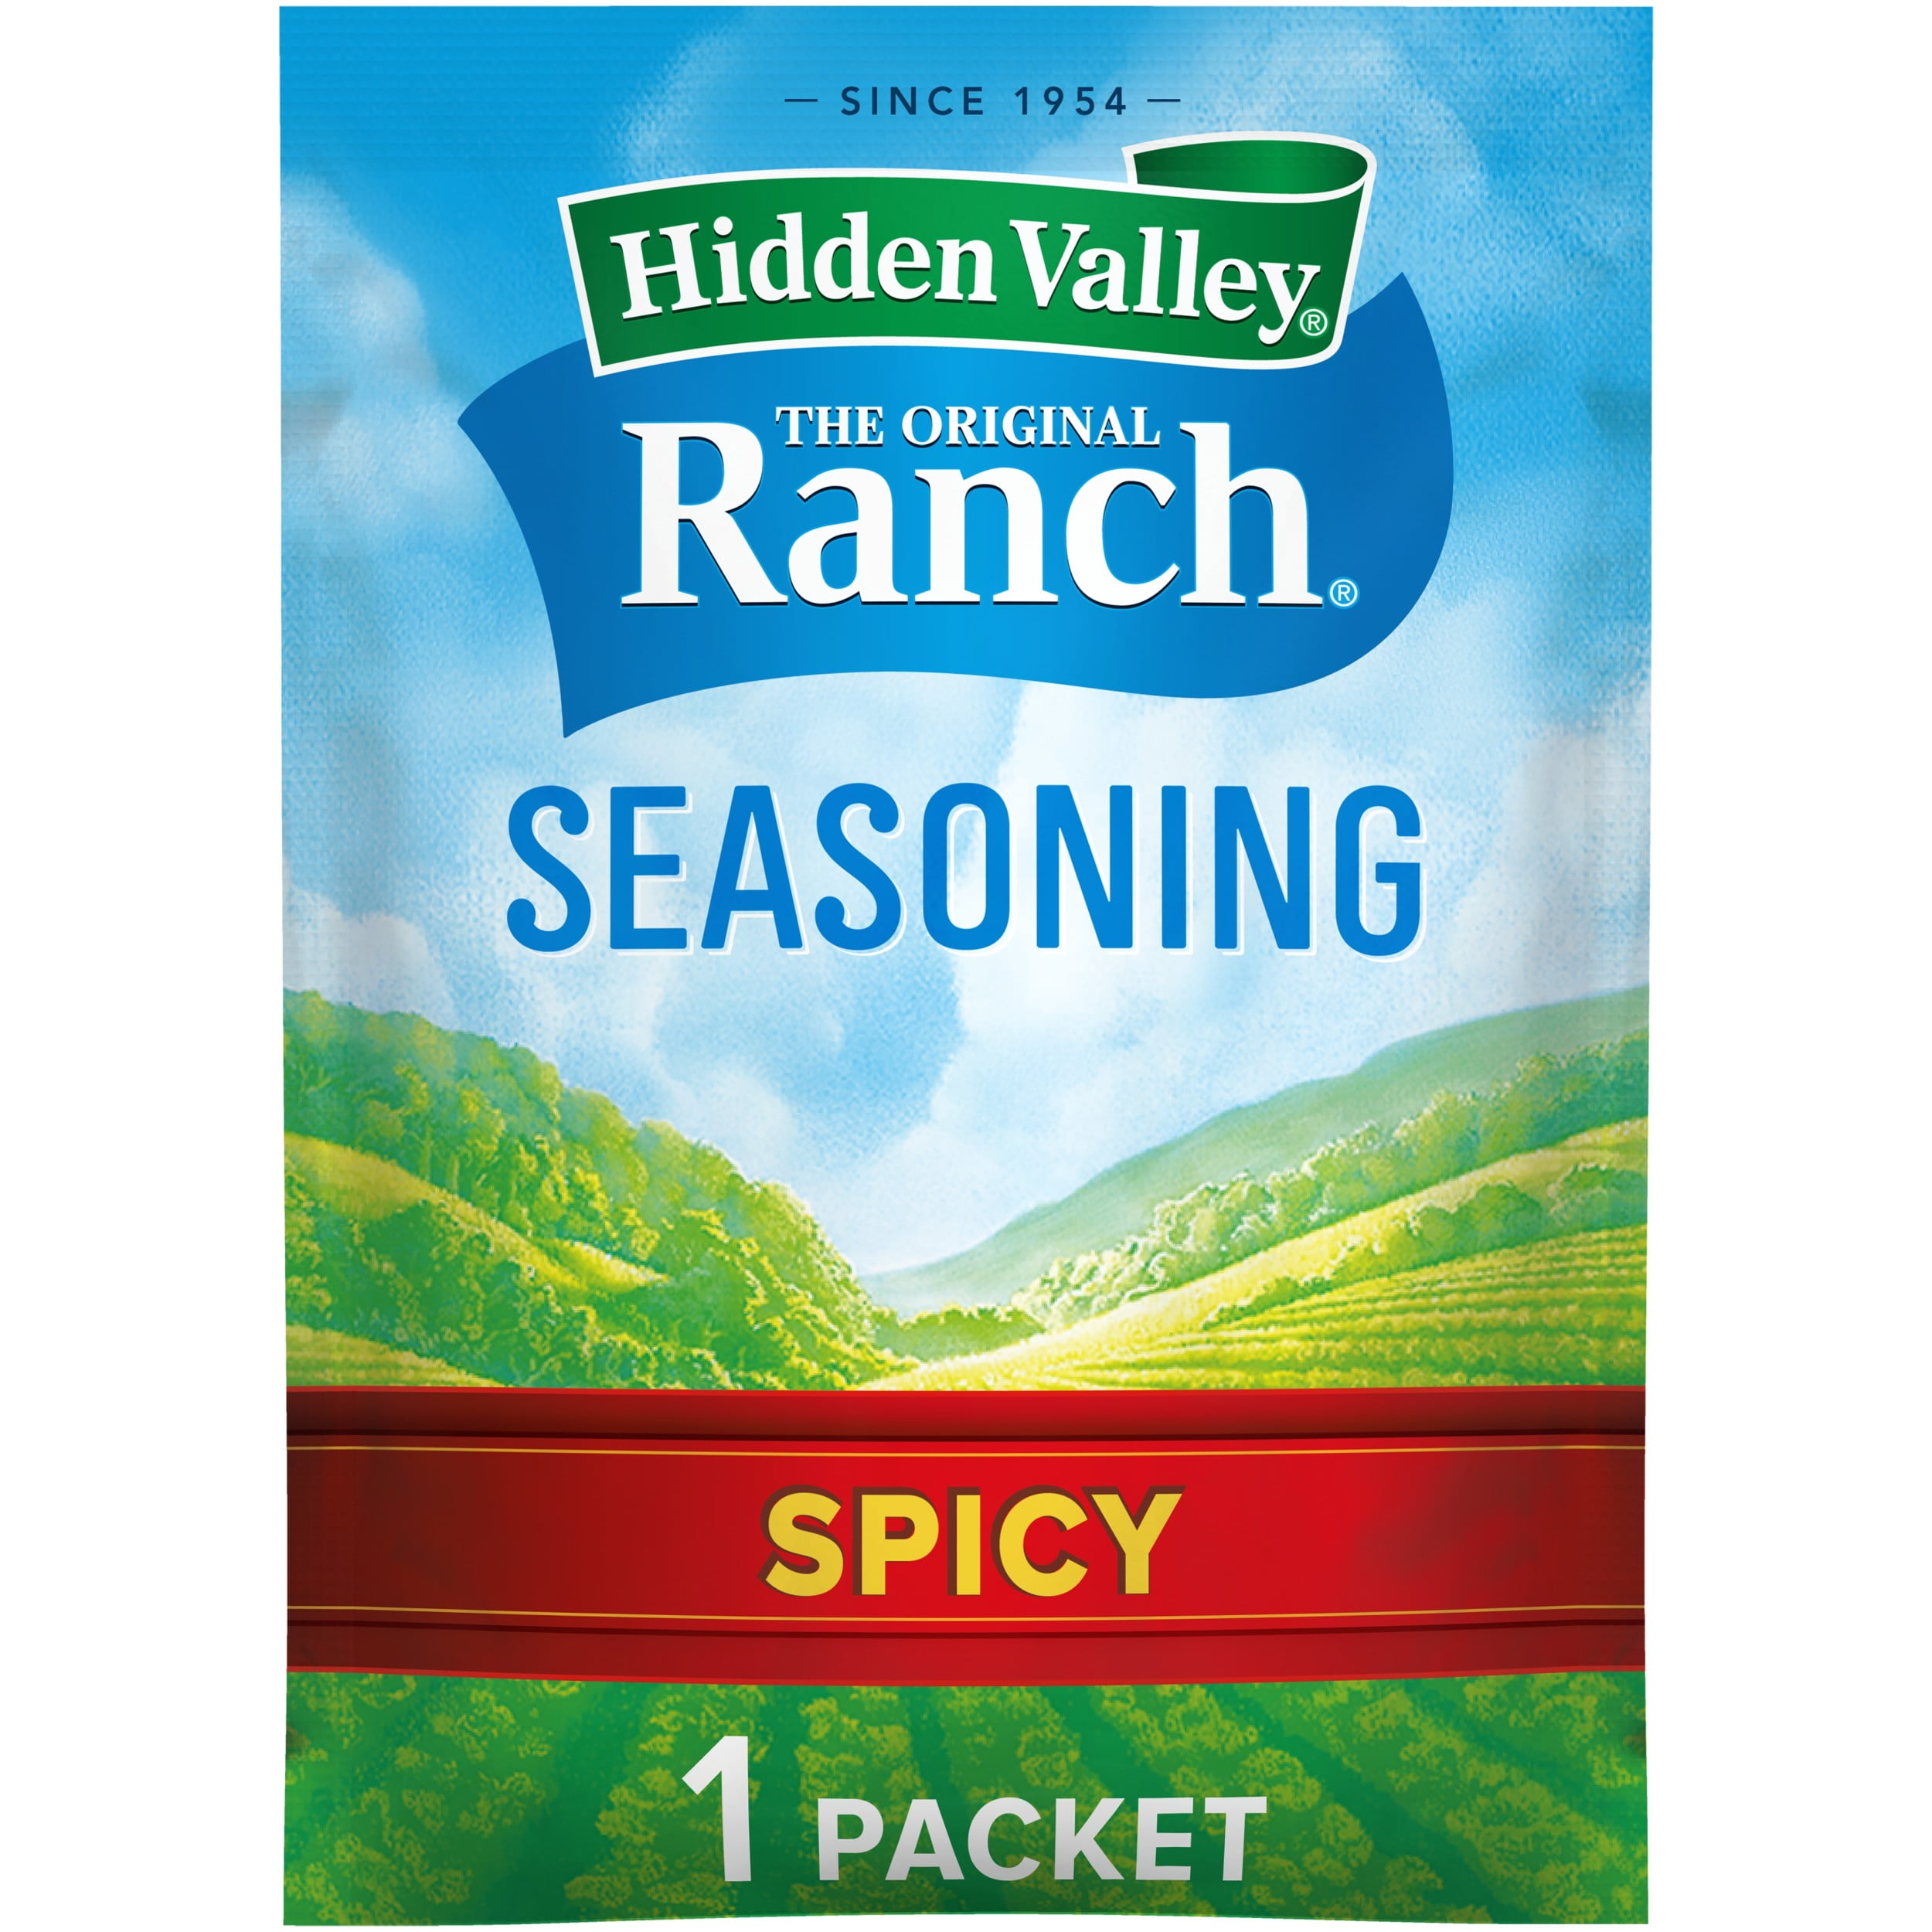 Hidden Valley Gluten Free Spicy Ranch Salad Dressing and Seasoning Mix, 1 oz